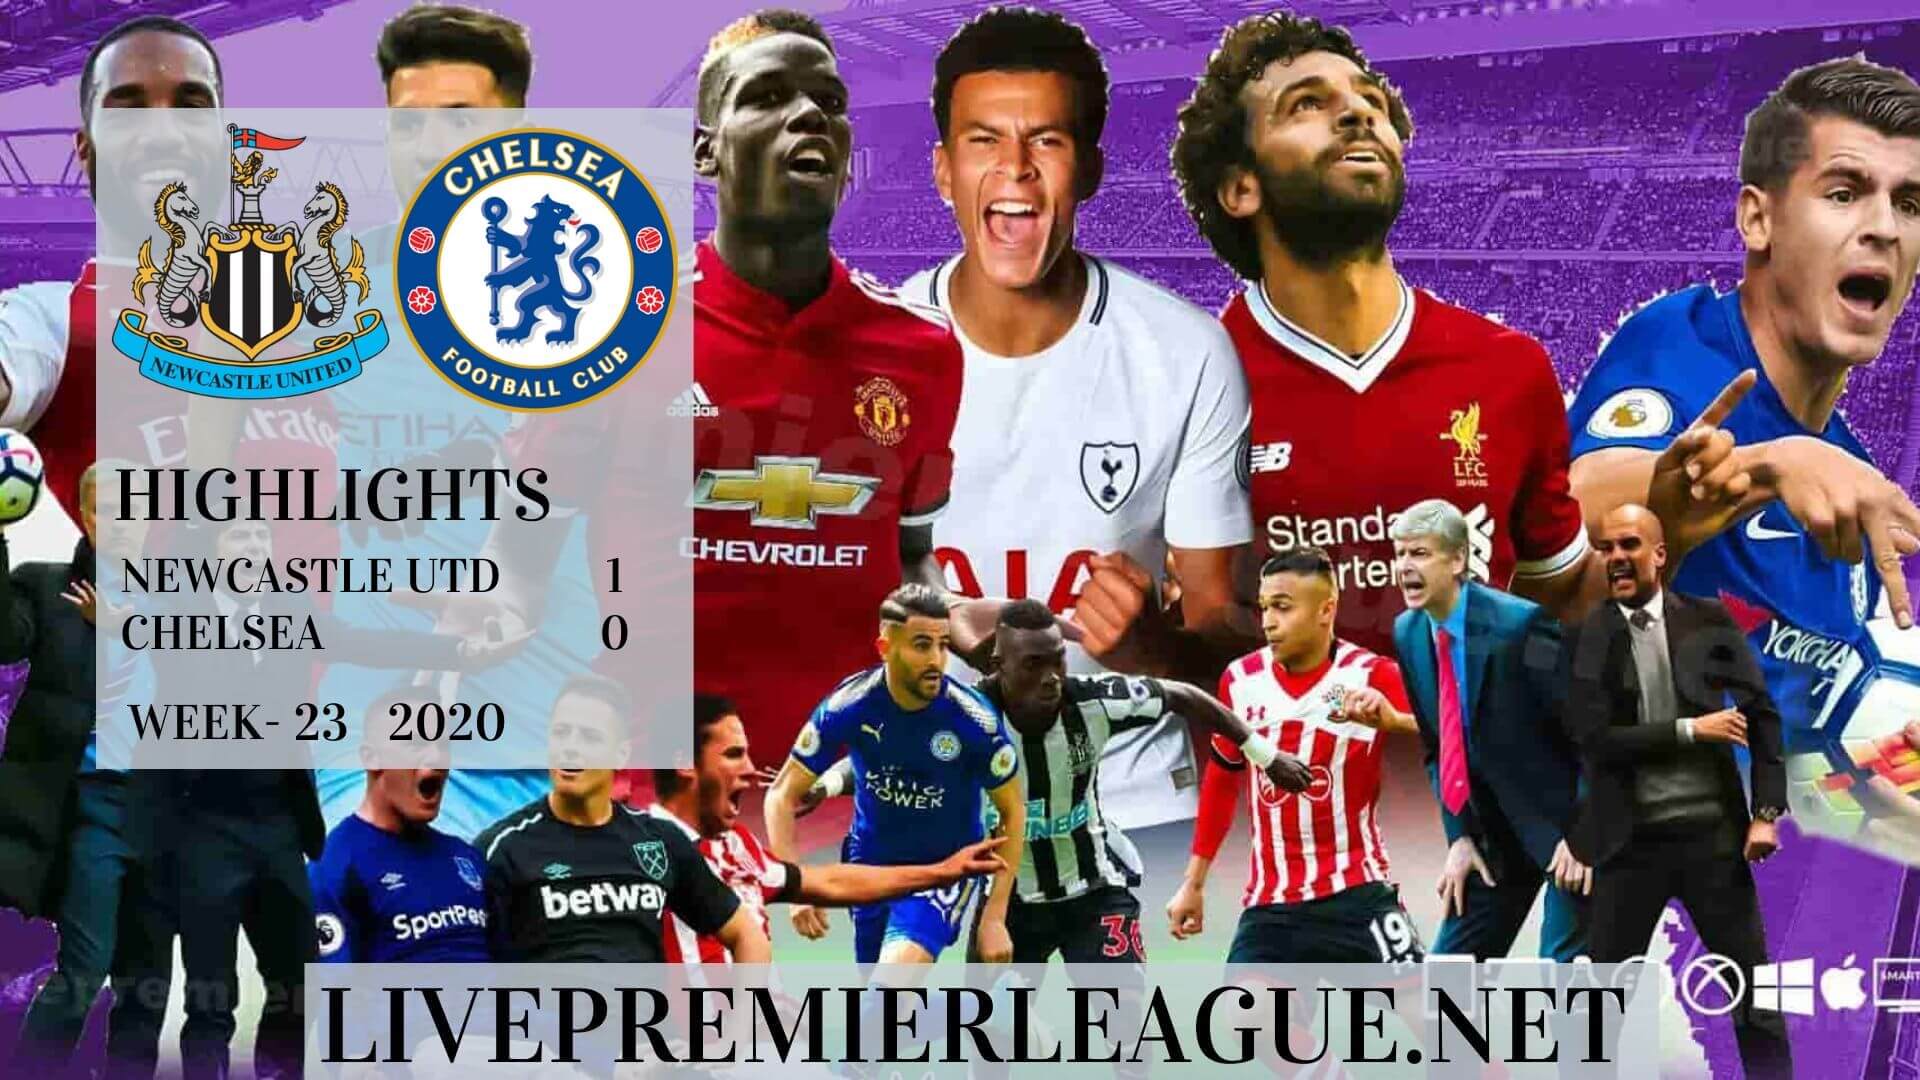 Newcastle United Vs Chelsea Highlights 2020 Week 23